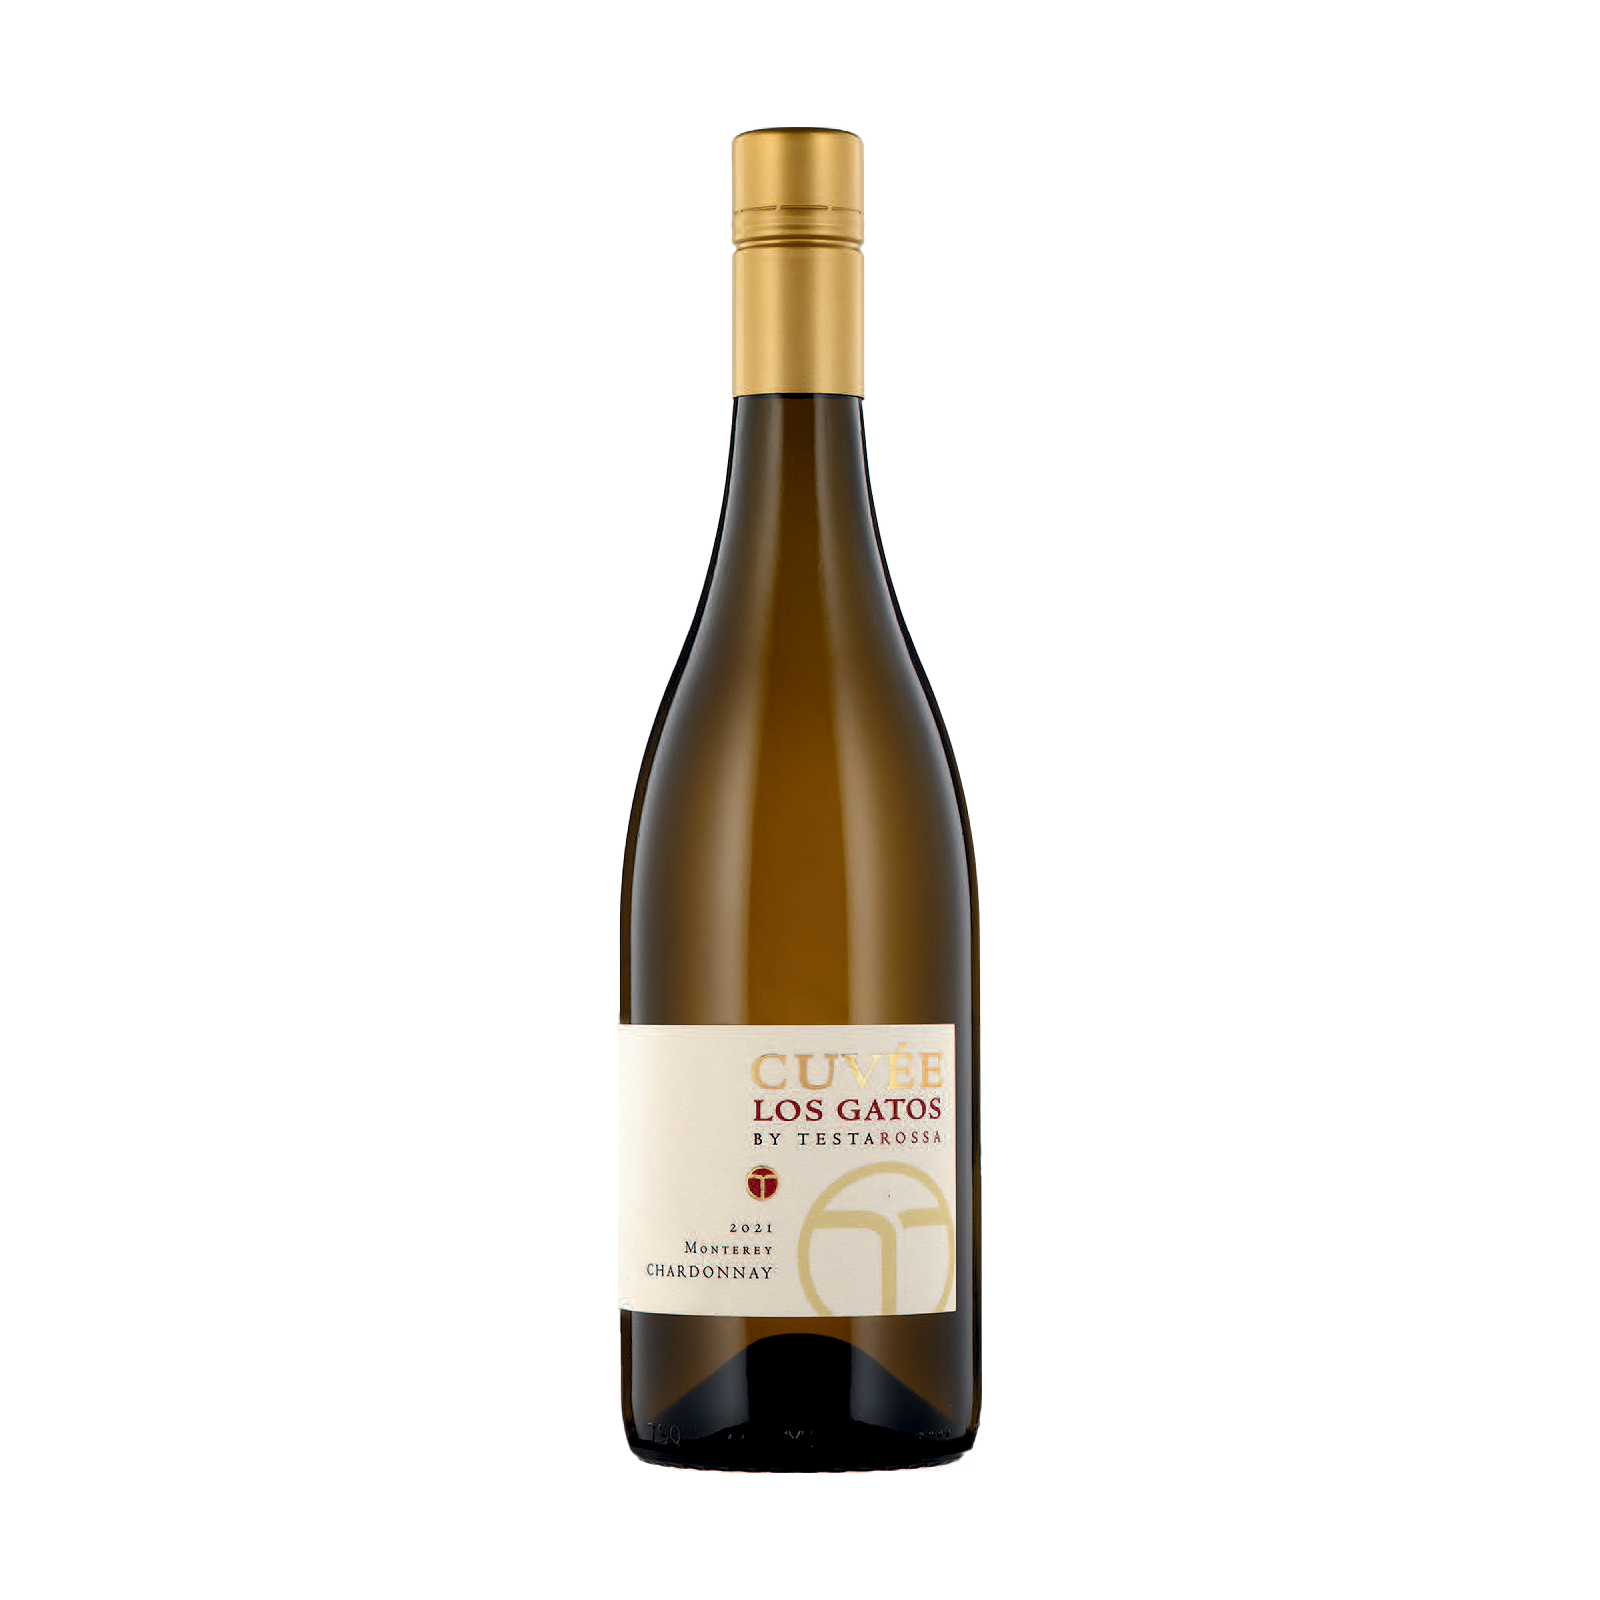 A bottle of Testarossa 2021 'Cuvee Los Gatos' Chardonnay